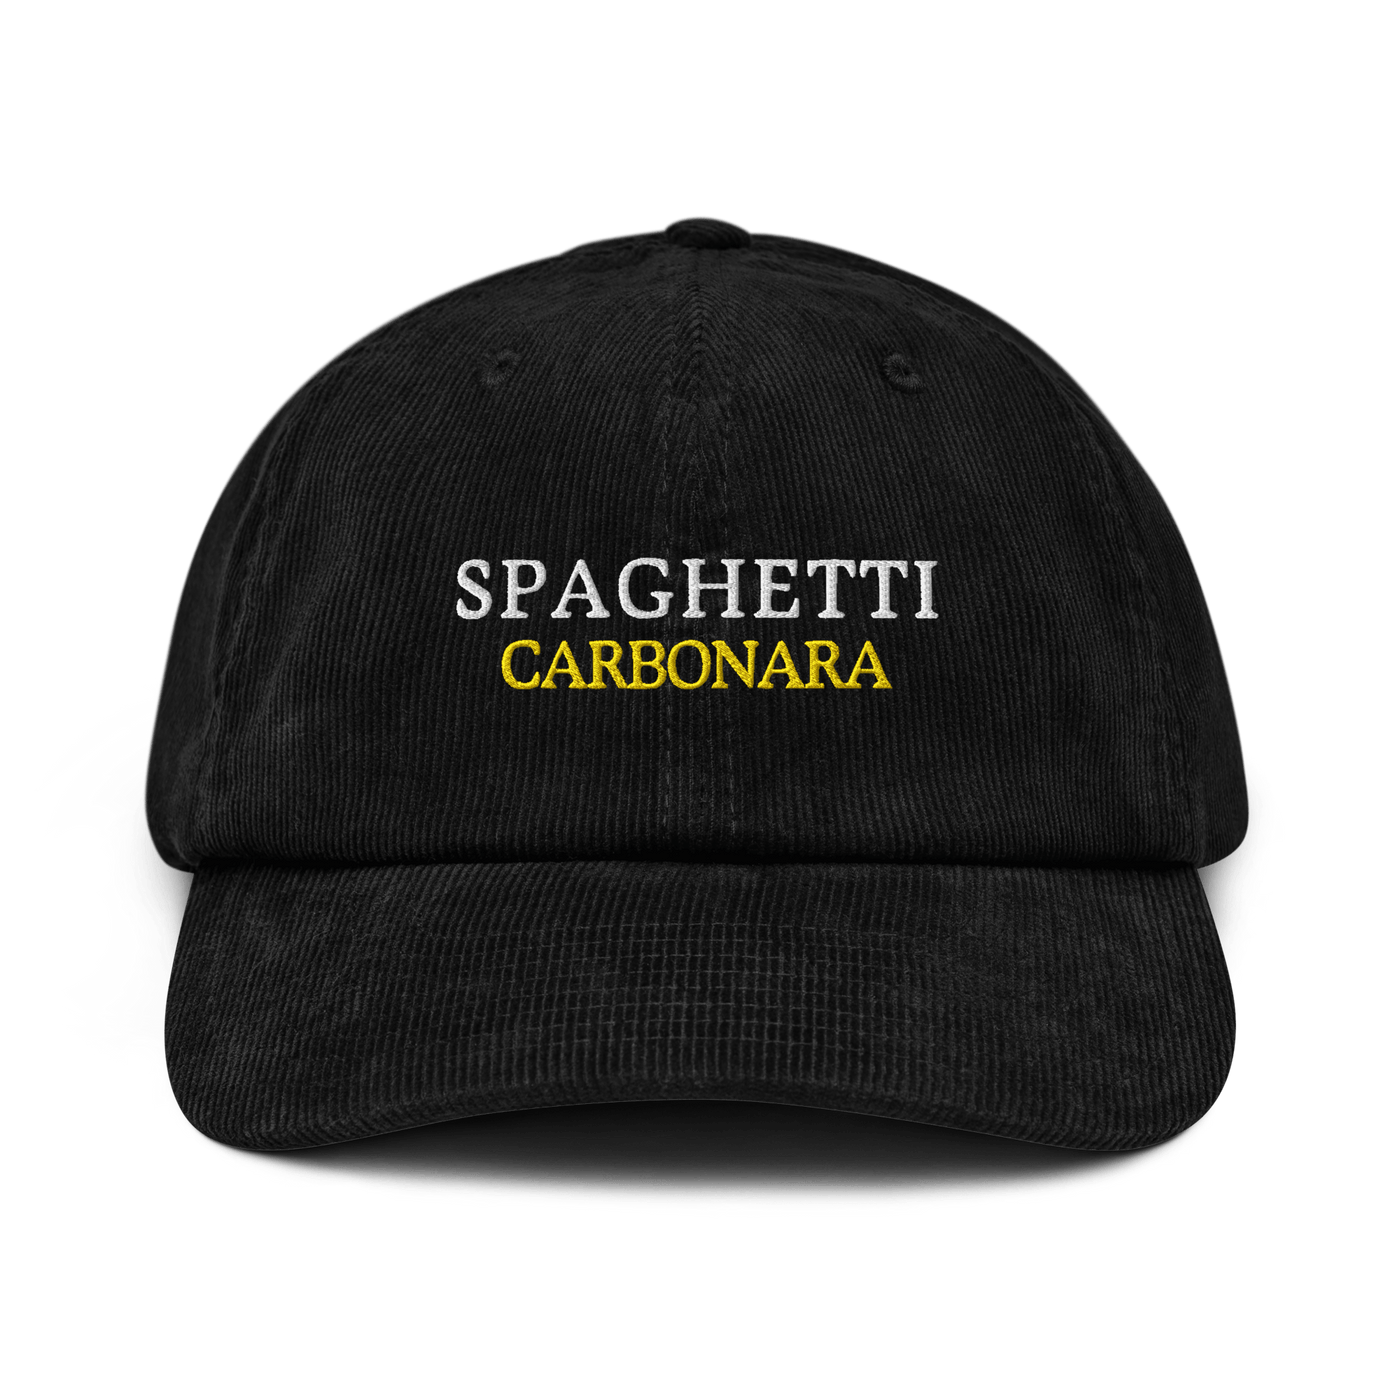 Spaghetti Carbonara Corduroy hat - Black - - Just Another Cap Store